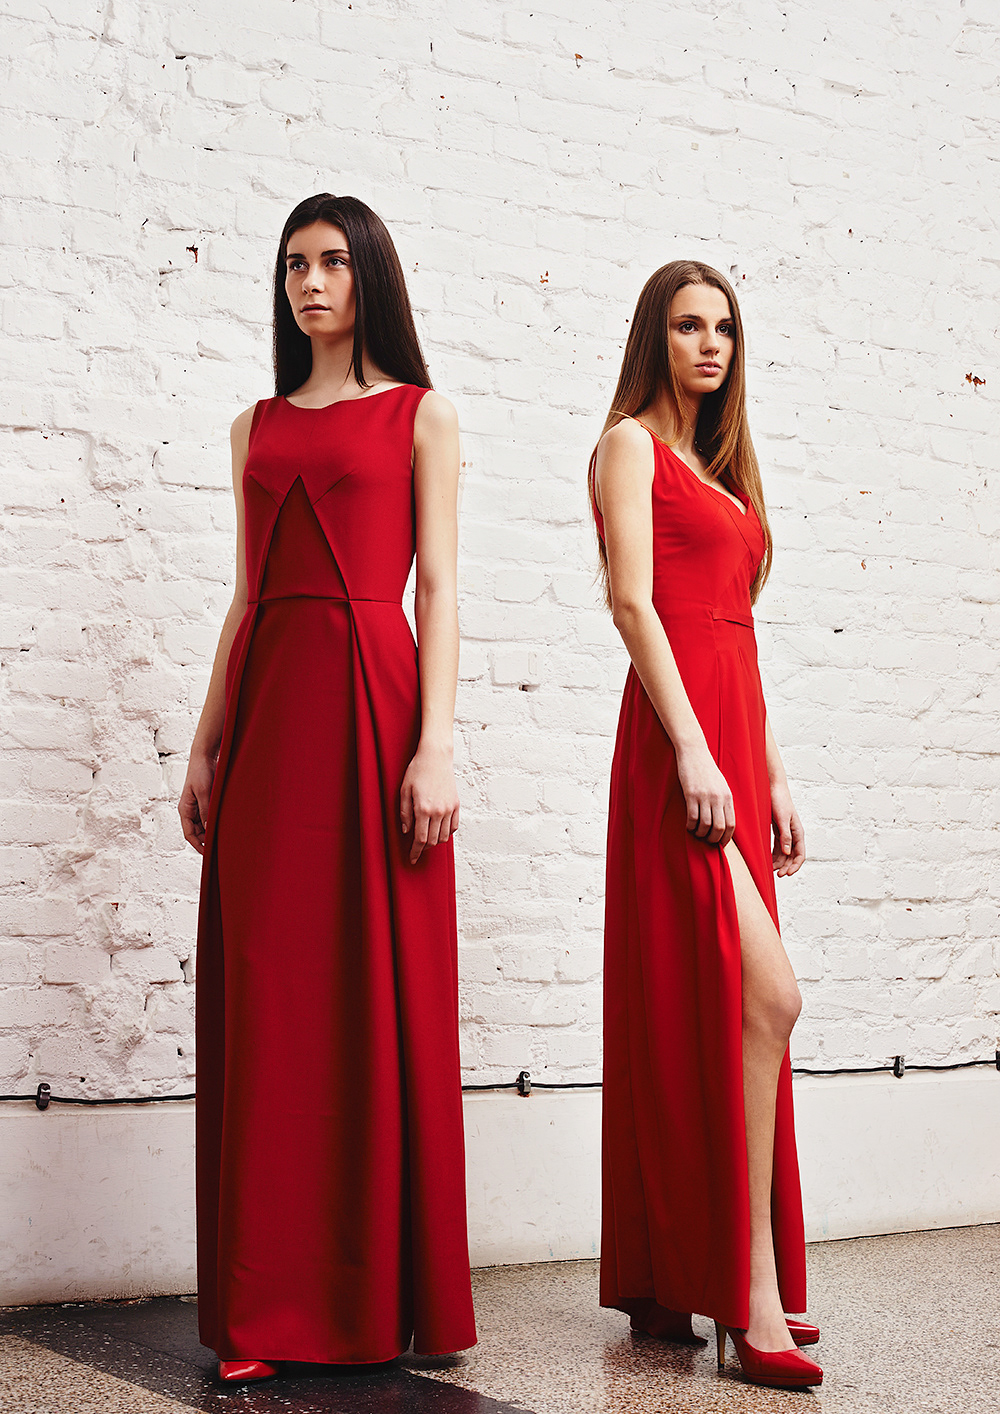 fashiondesign dress strokes red black